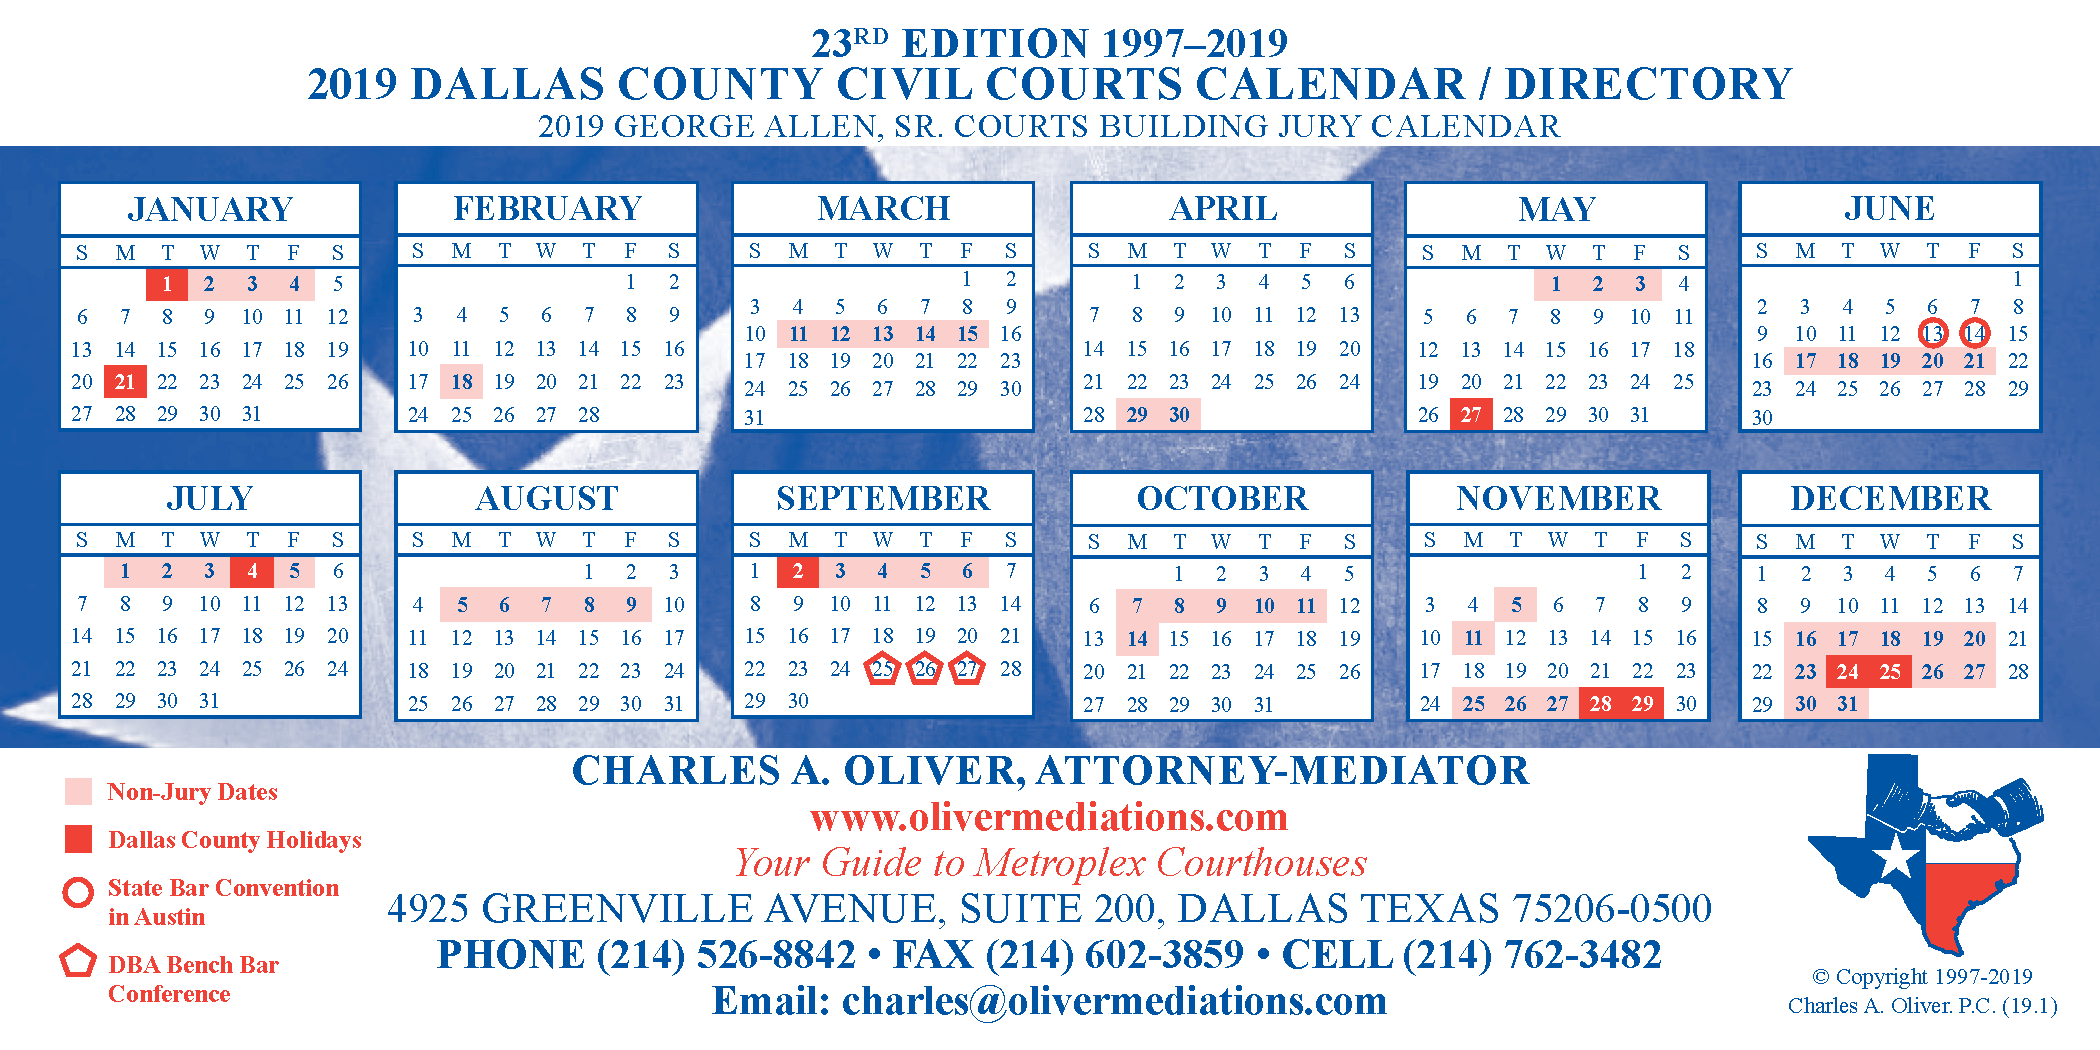 Charles Oliver Mediator 2019 Dallas County Civil Courts Calendar